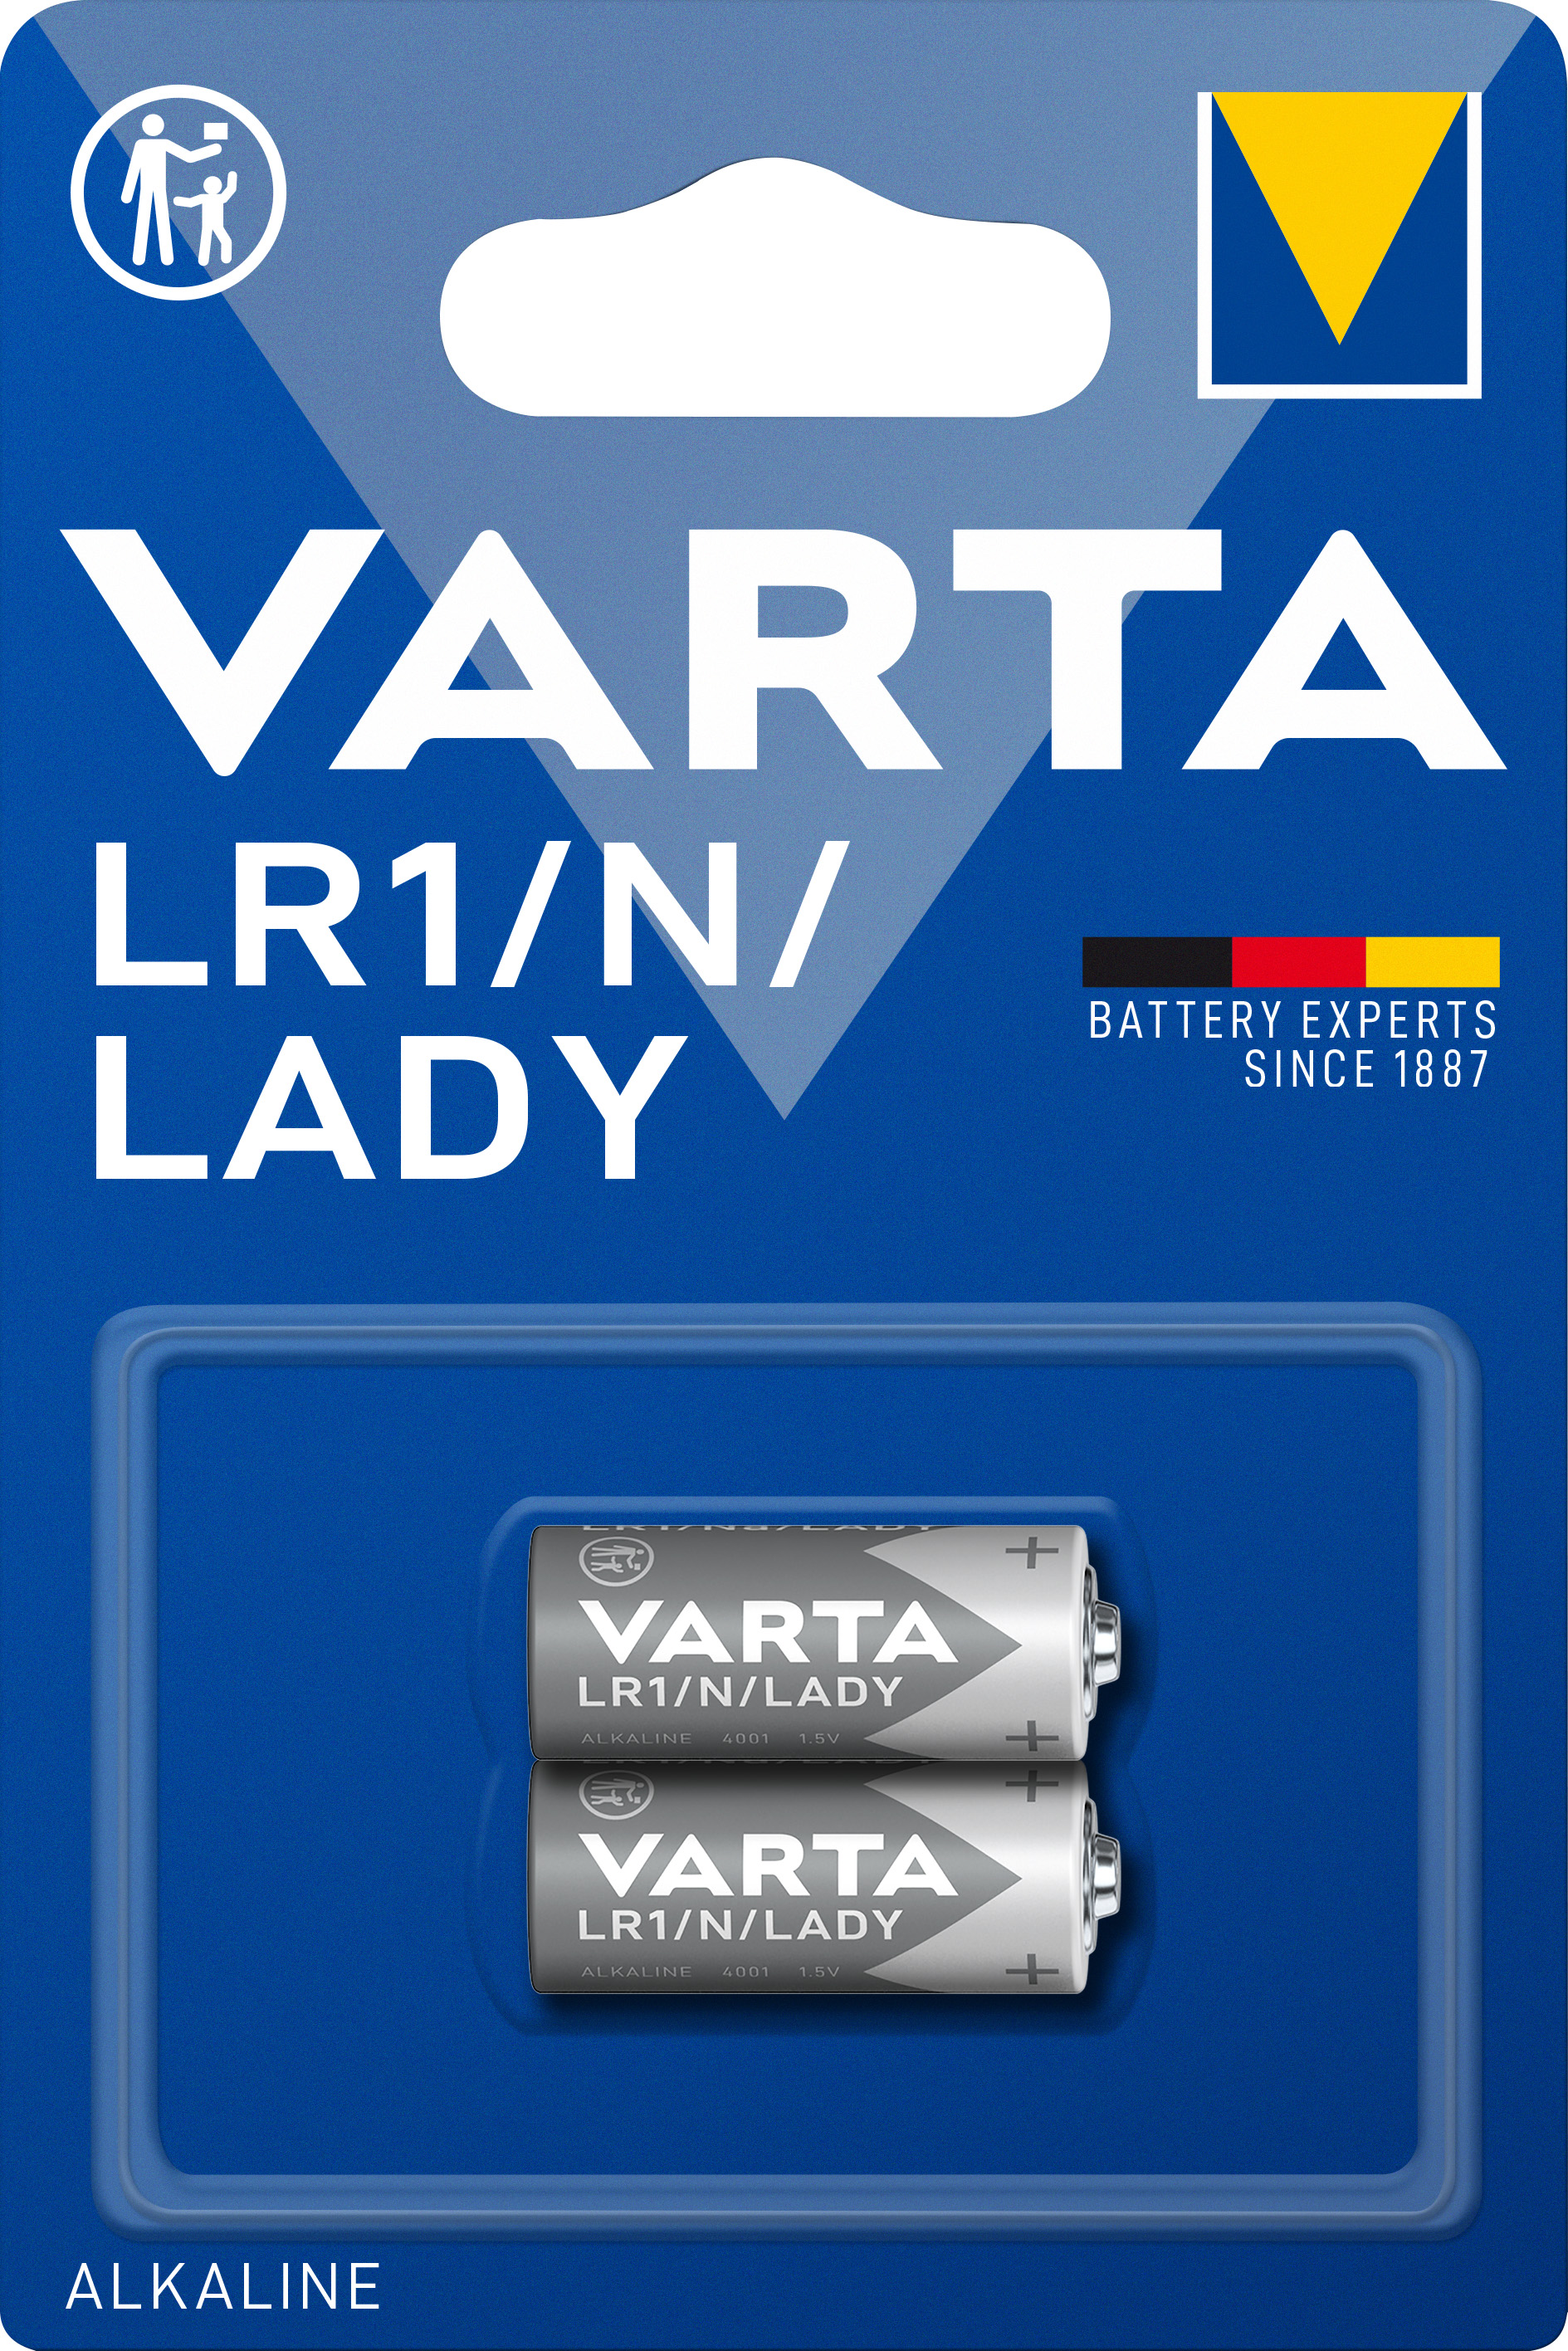 Varta Batterie Alkaline, LR1, N, LADY, 1.5V Electronics, Retail Blister (2-Pack)